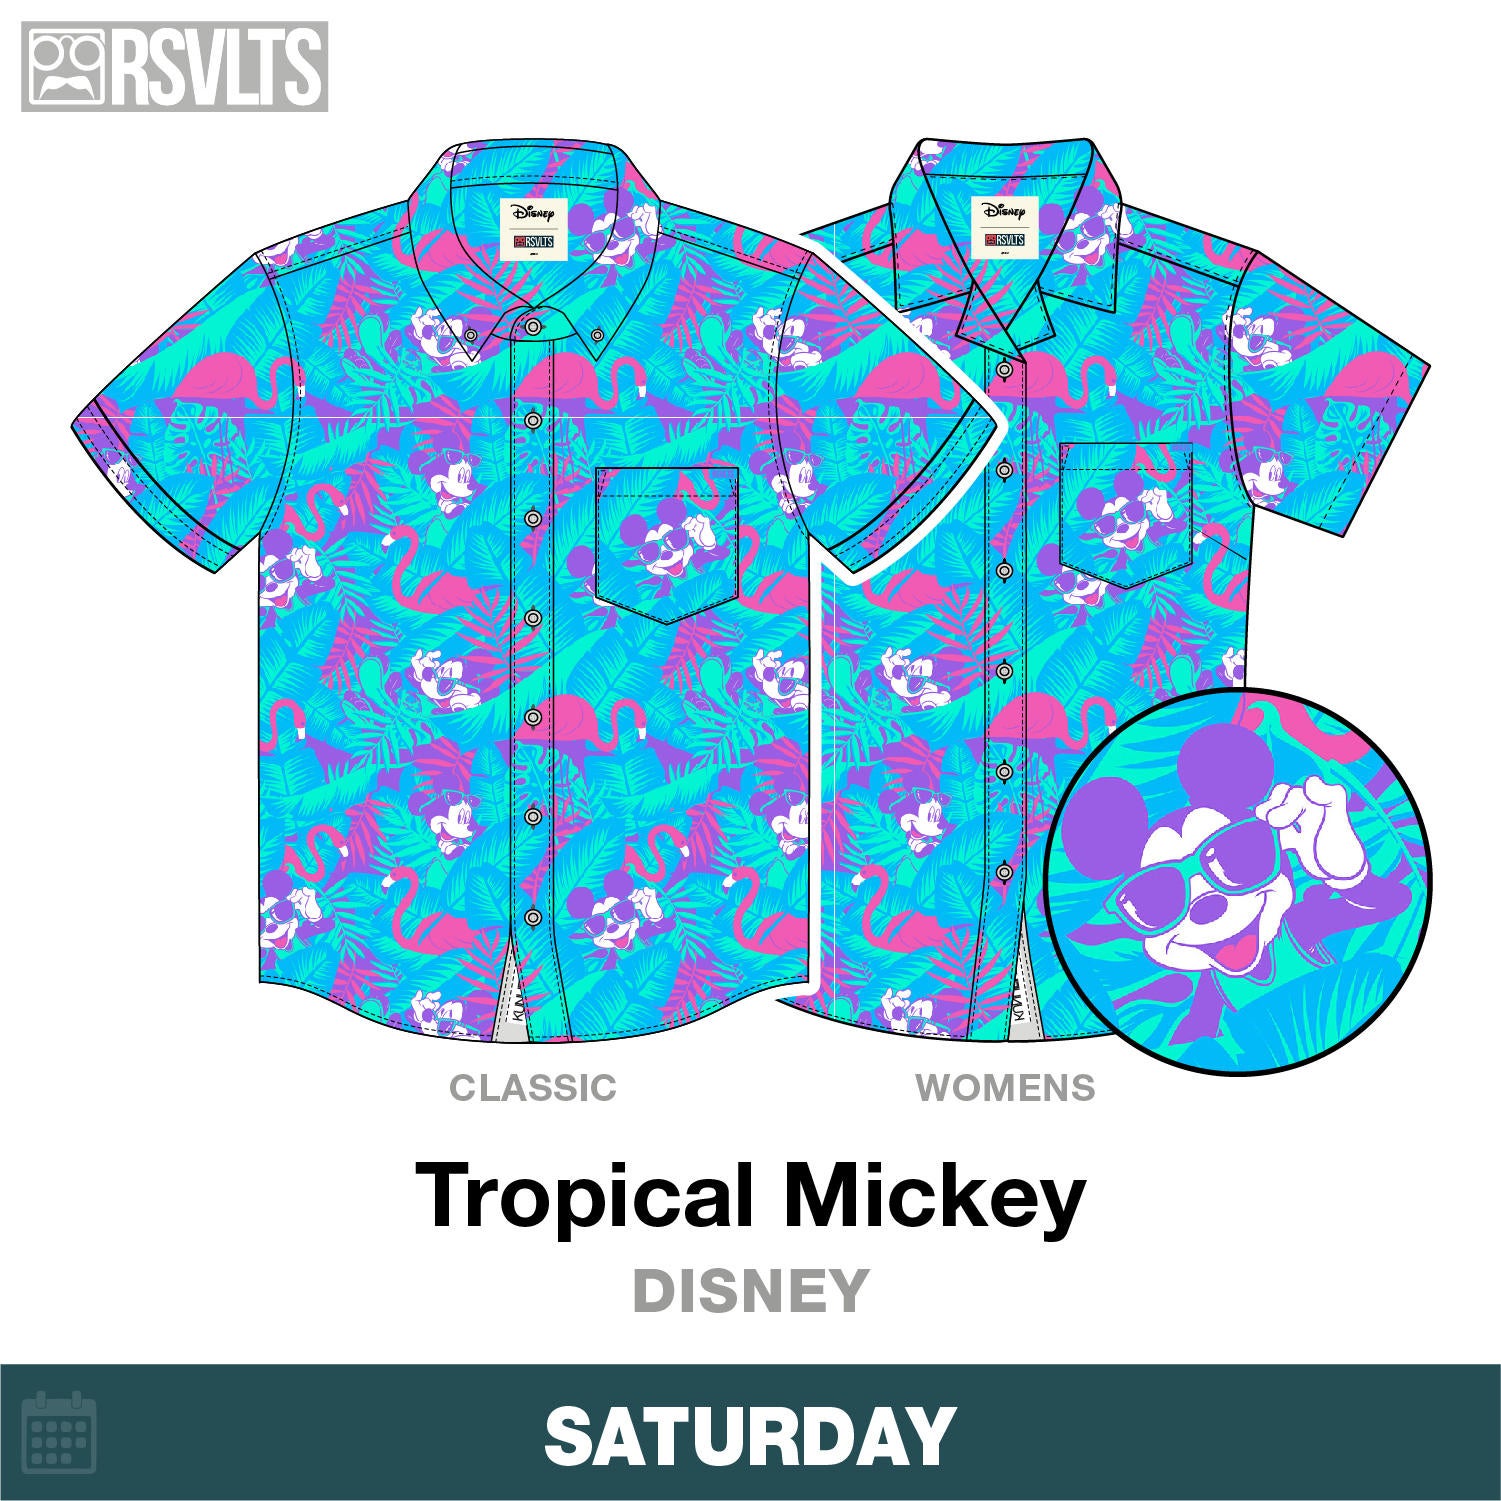 rsvlts-sdcc-tropical-mickey.jpg